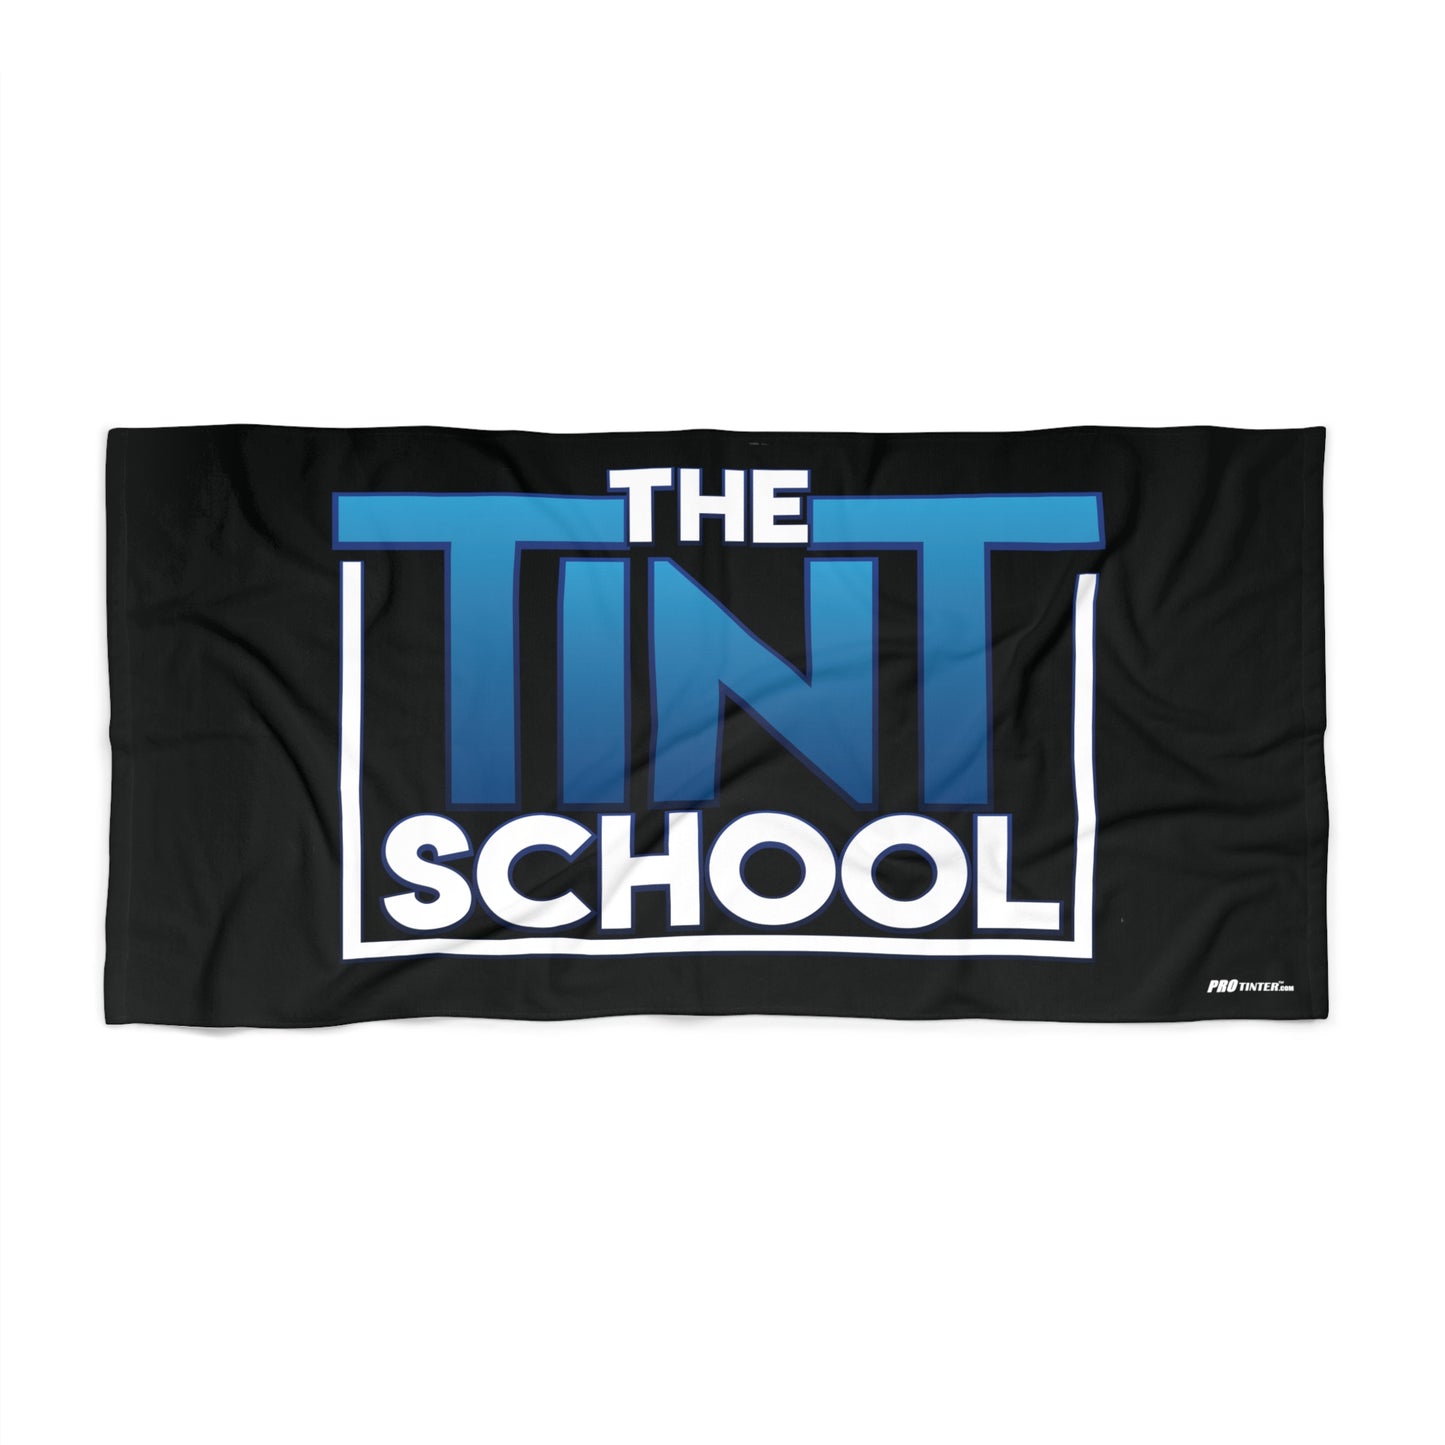 The Tint School Dash Towel